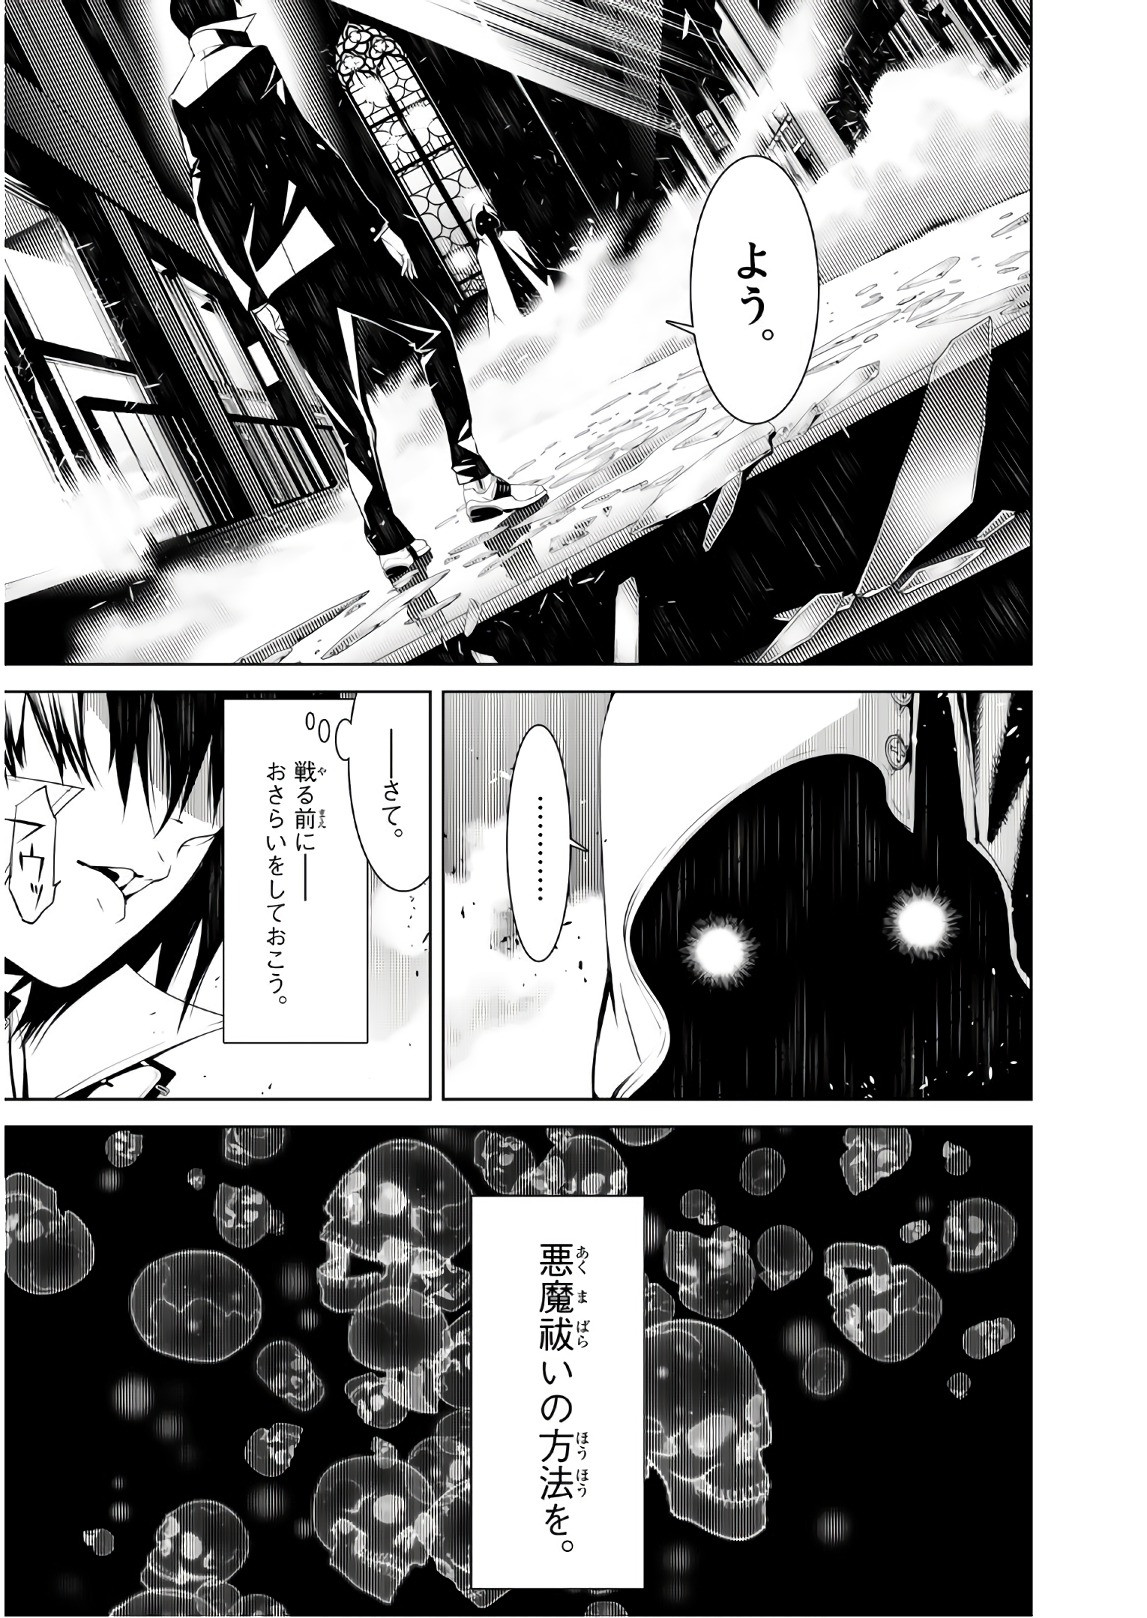 Bakemonogatari - Chapter 38 - Page 1